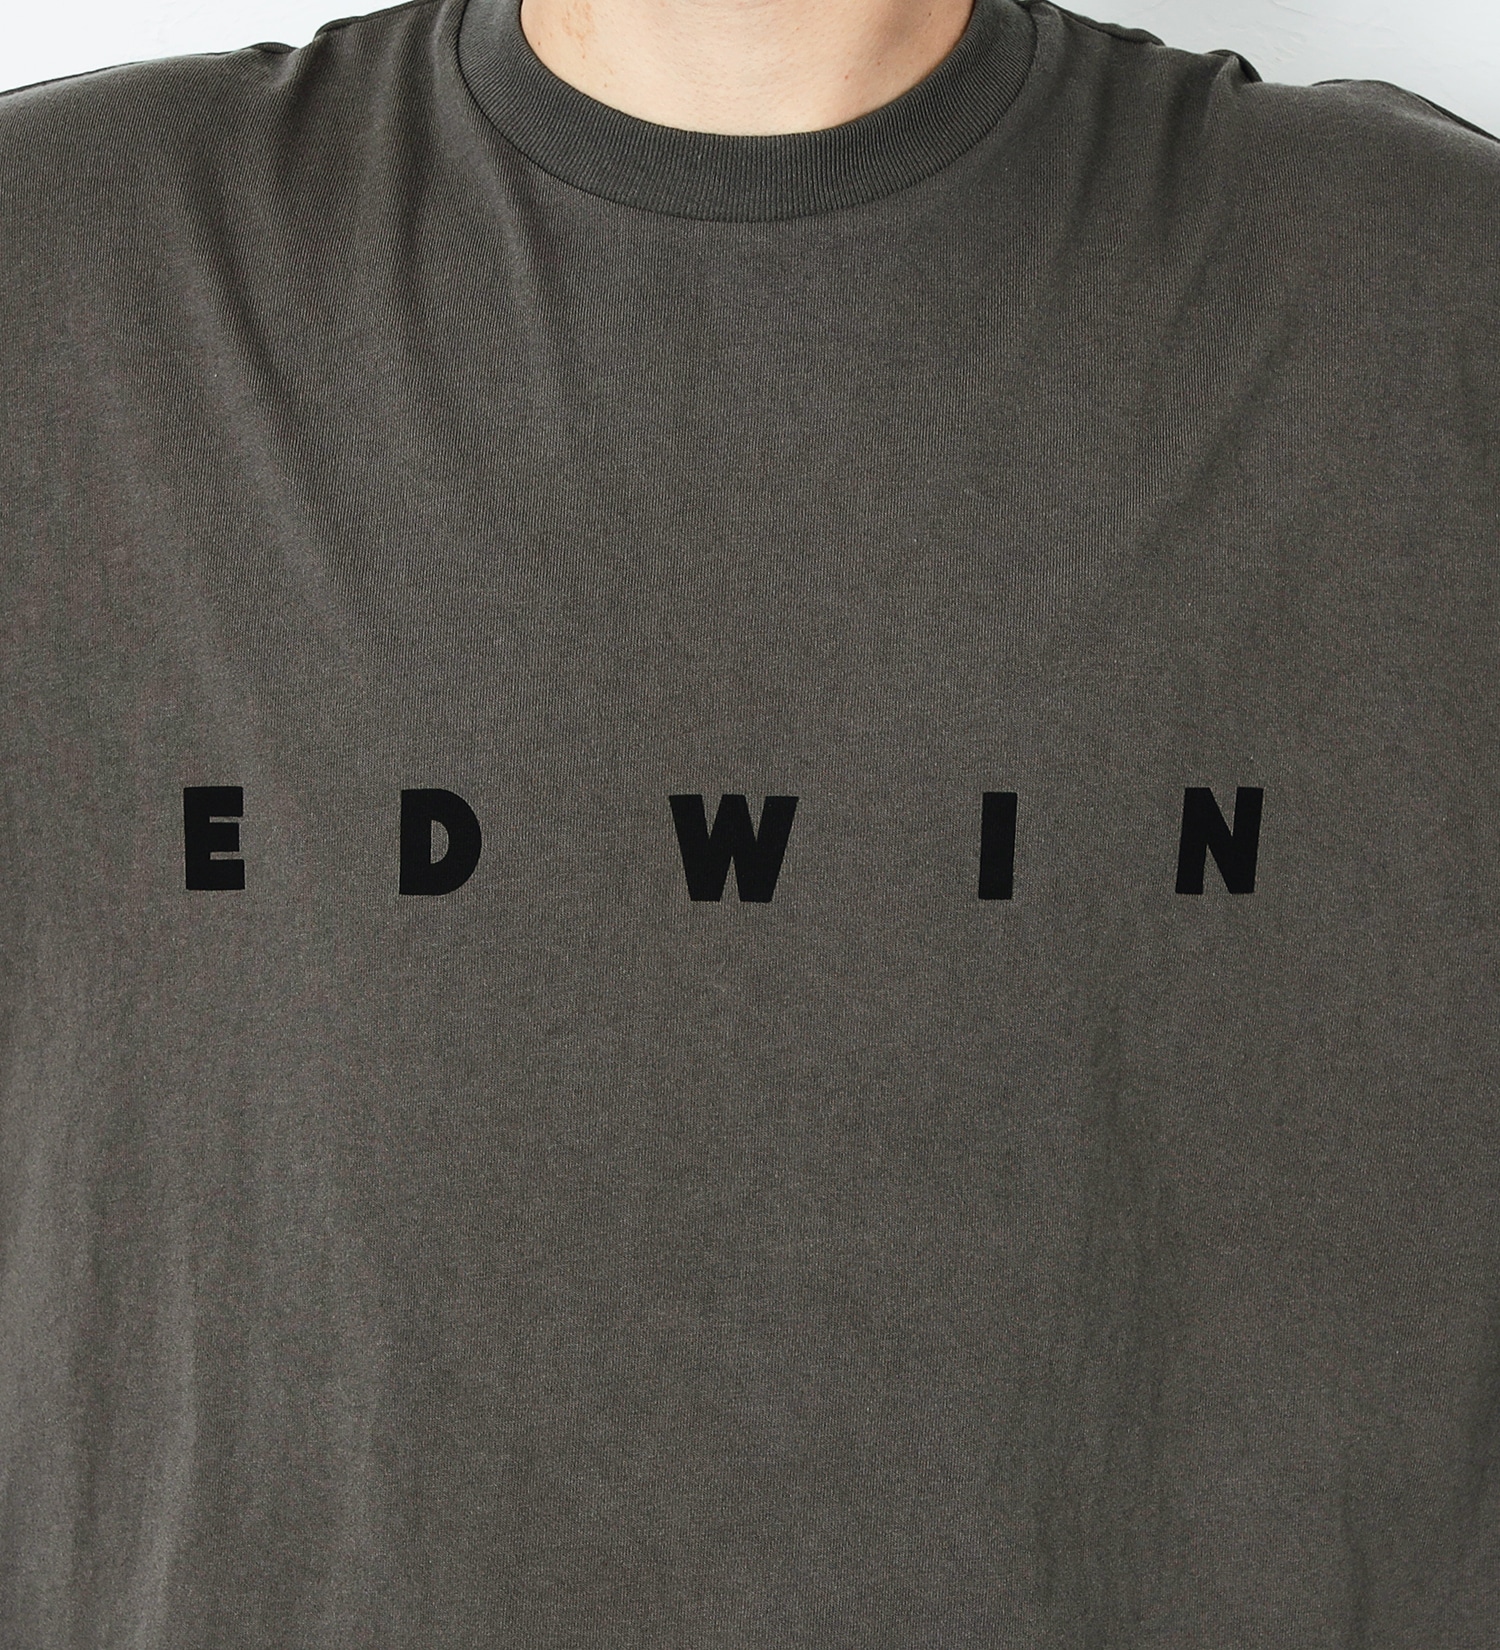 EDWIN(エドウイン)の【試着対象】A KIND OF BLACK BIG FIT Tシャツ|トップス/Tシャツ/カットソー/メンズ|グレー